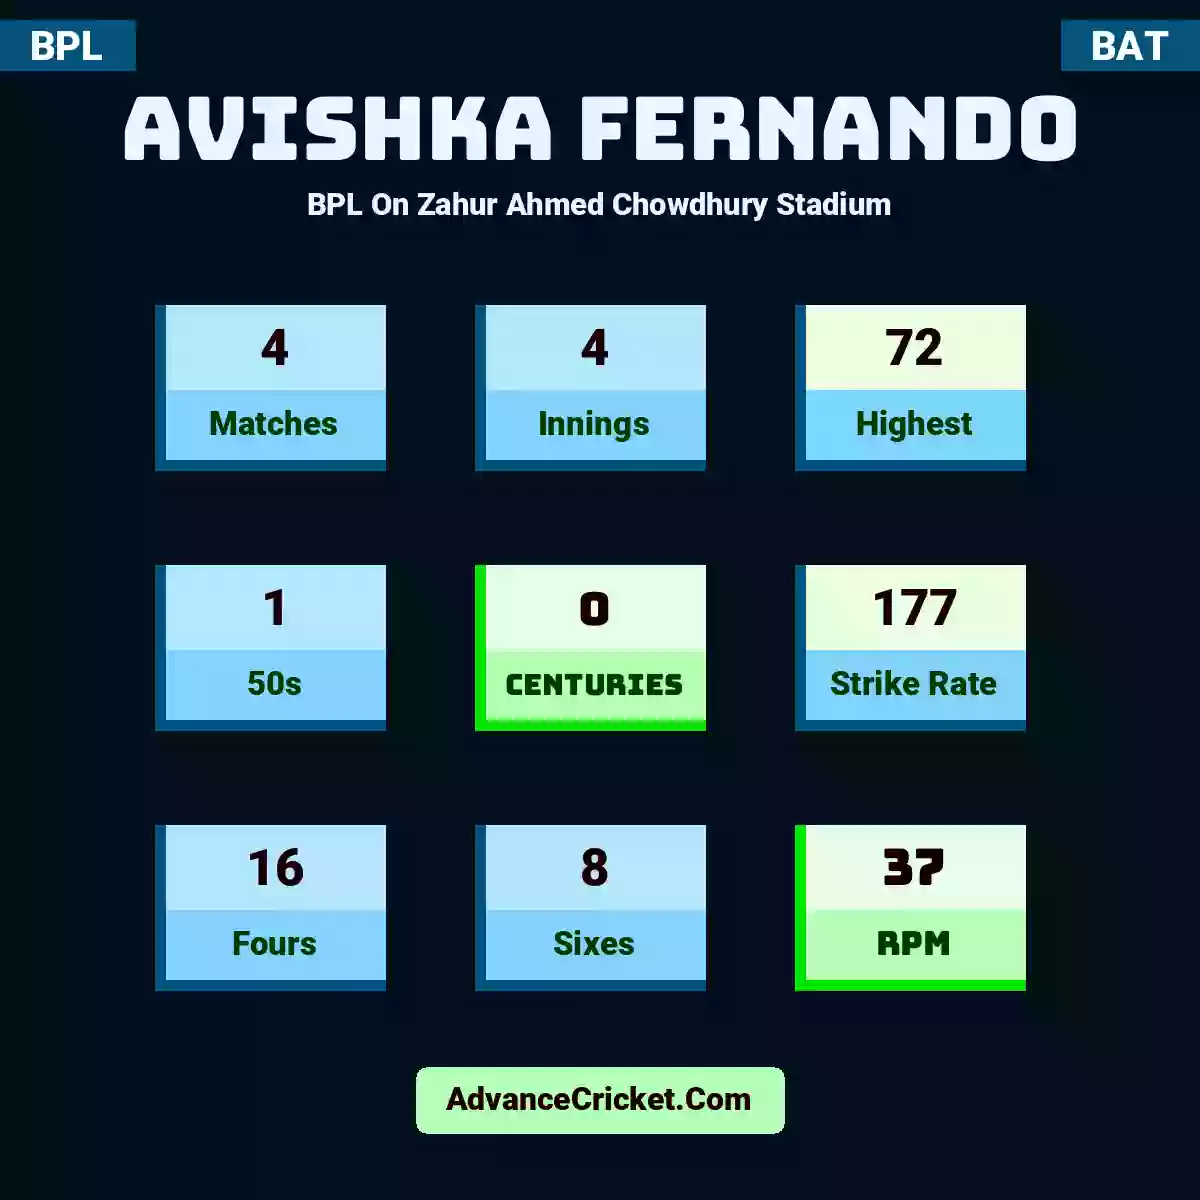 Avishka Fernando BPL  On Zahur Ahmed Chowdhury Stadium, Avishka Fernando played 4 matches, scored 72 runs as highest, 1 half-centuries, and 0 centuries, with a strike rate of 177. A.Fernando hit 16 fours and 8 sixes, with an RPM of 37.